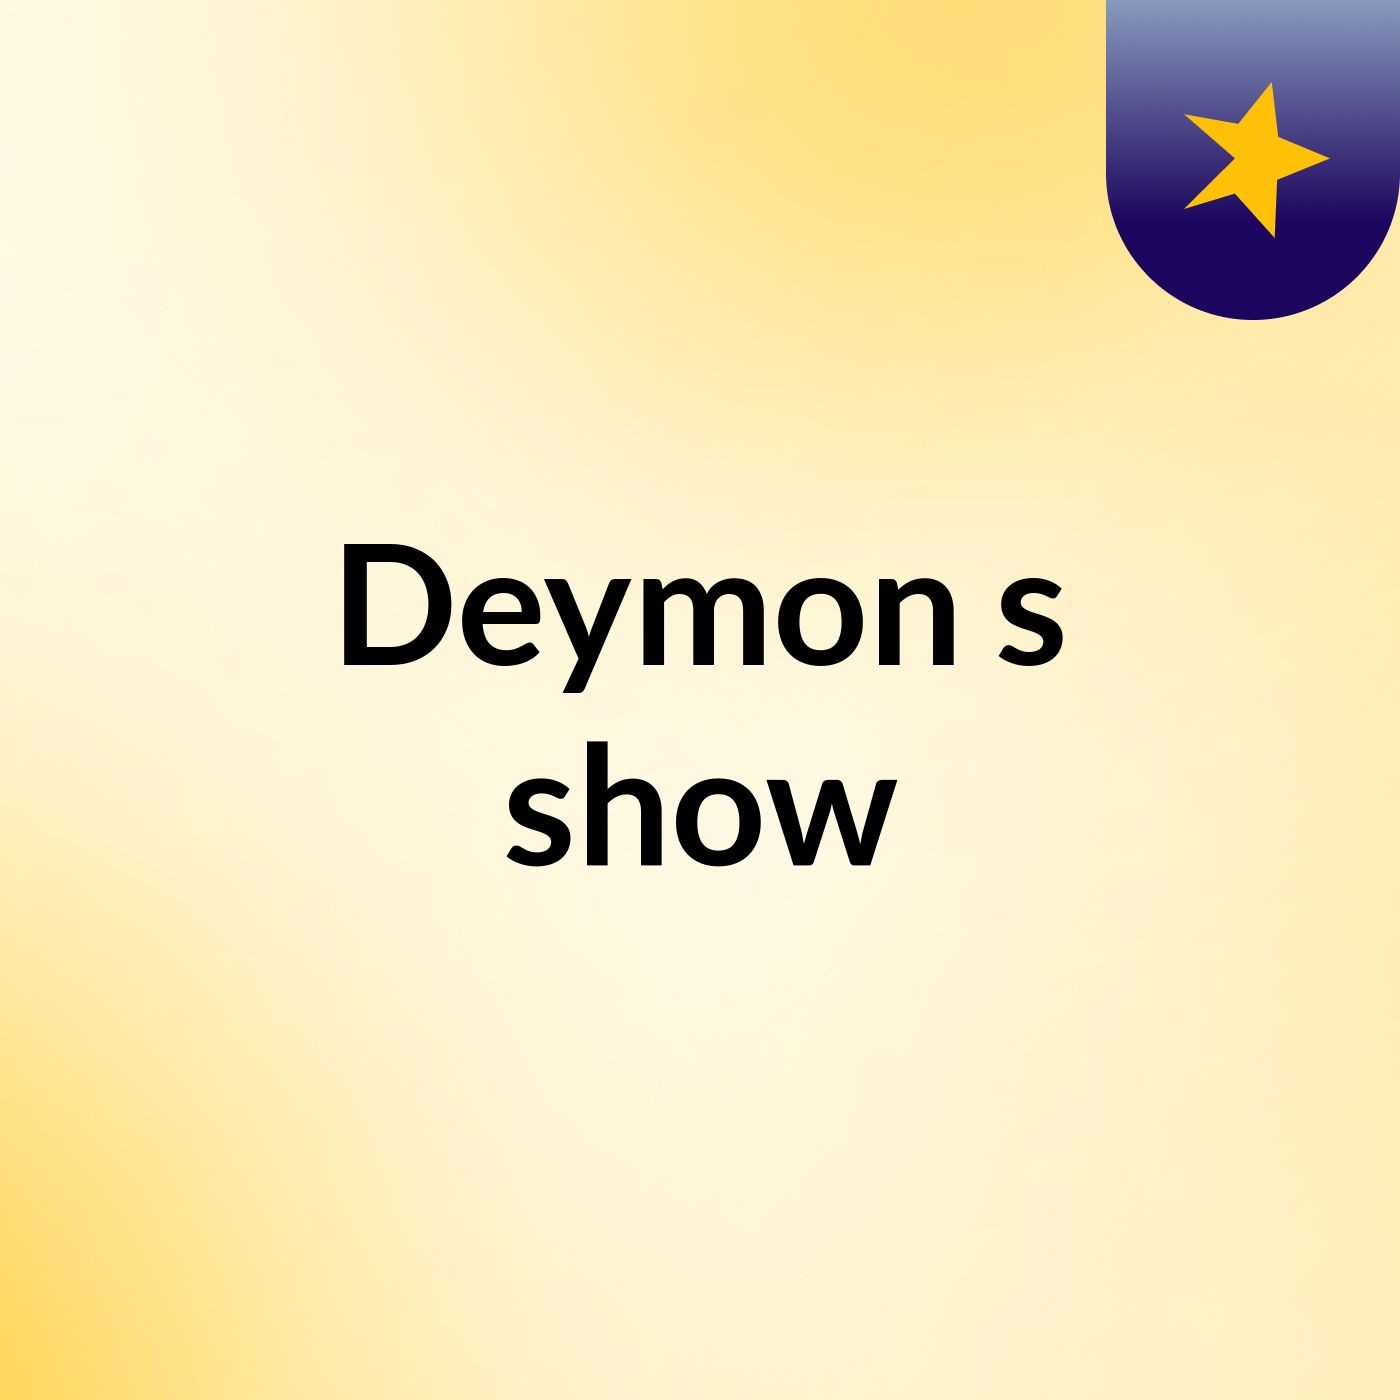 Deymon's show